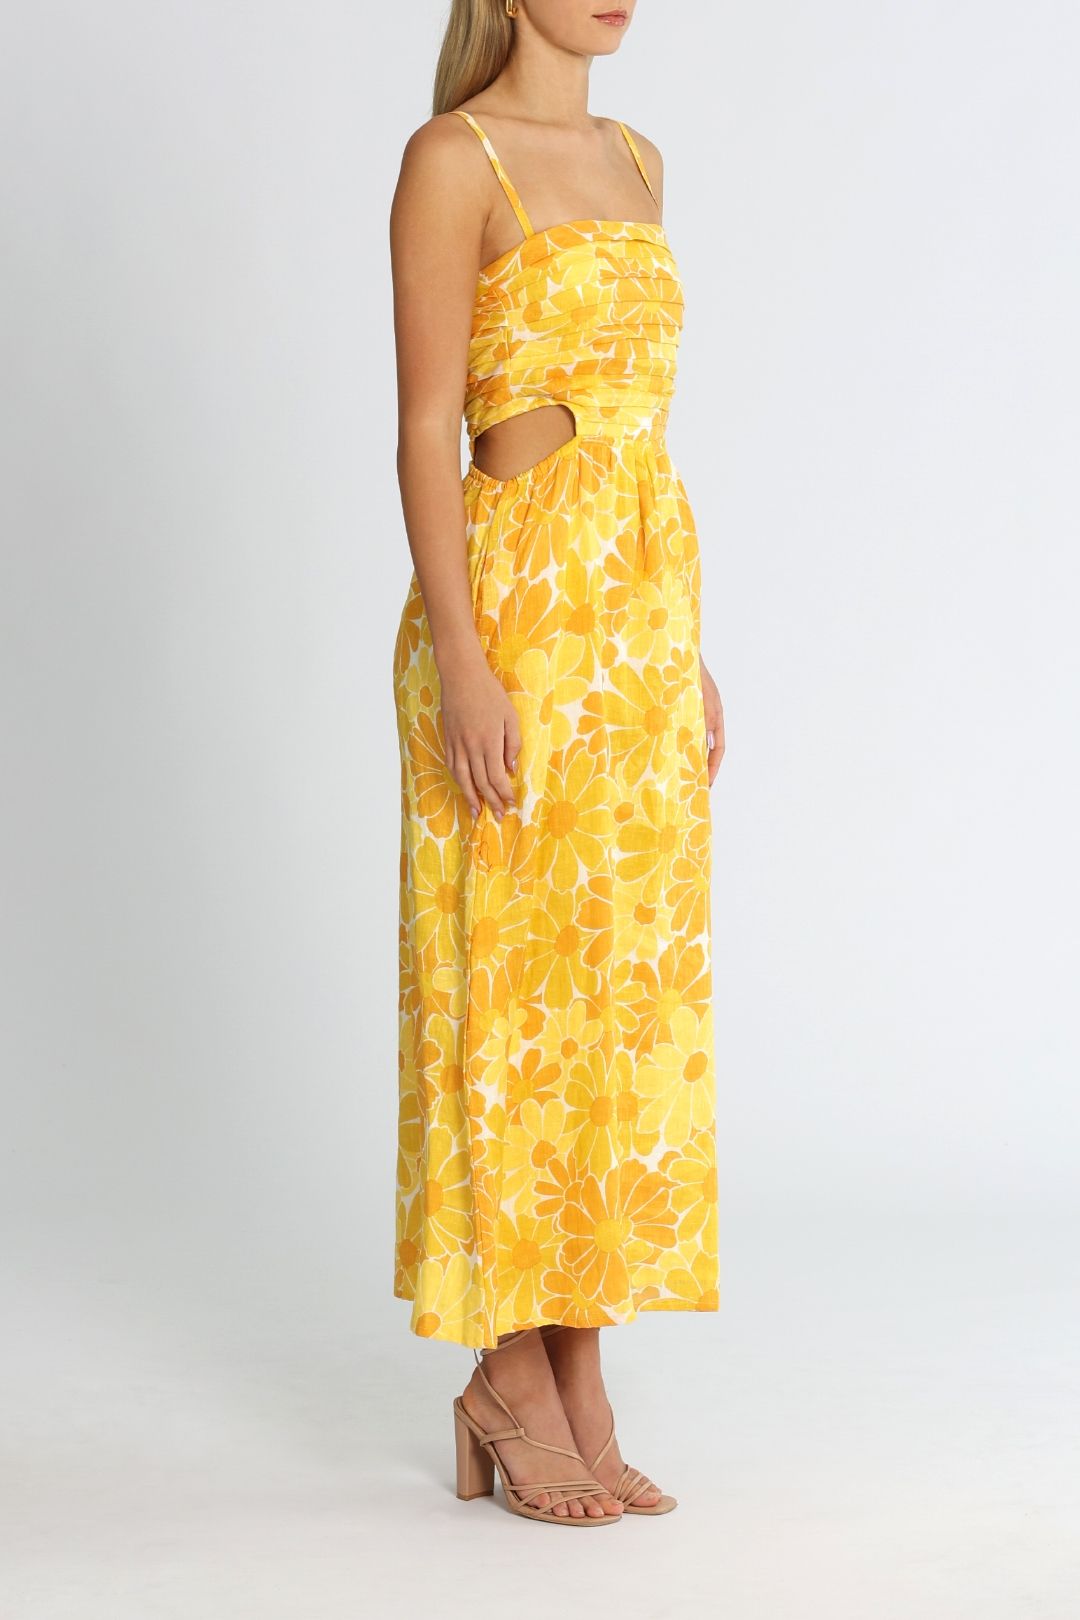 Faithfull Jamaica Midi Dress Yellow Floral Cutout